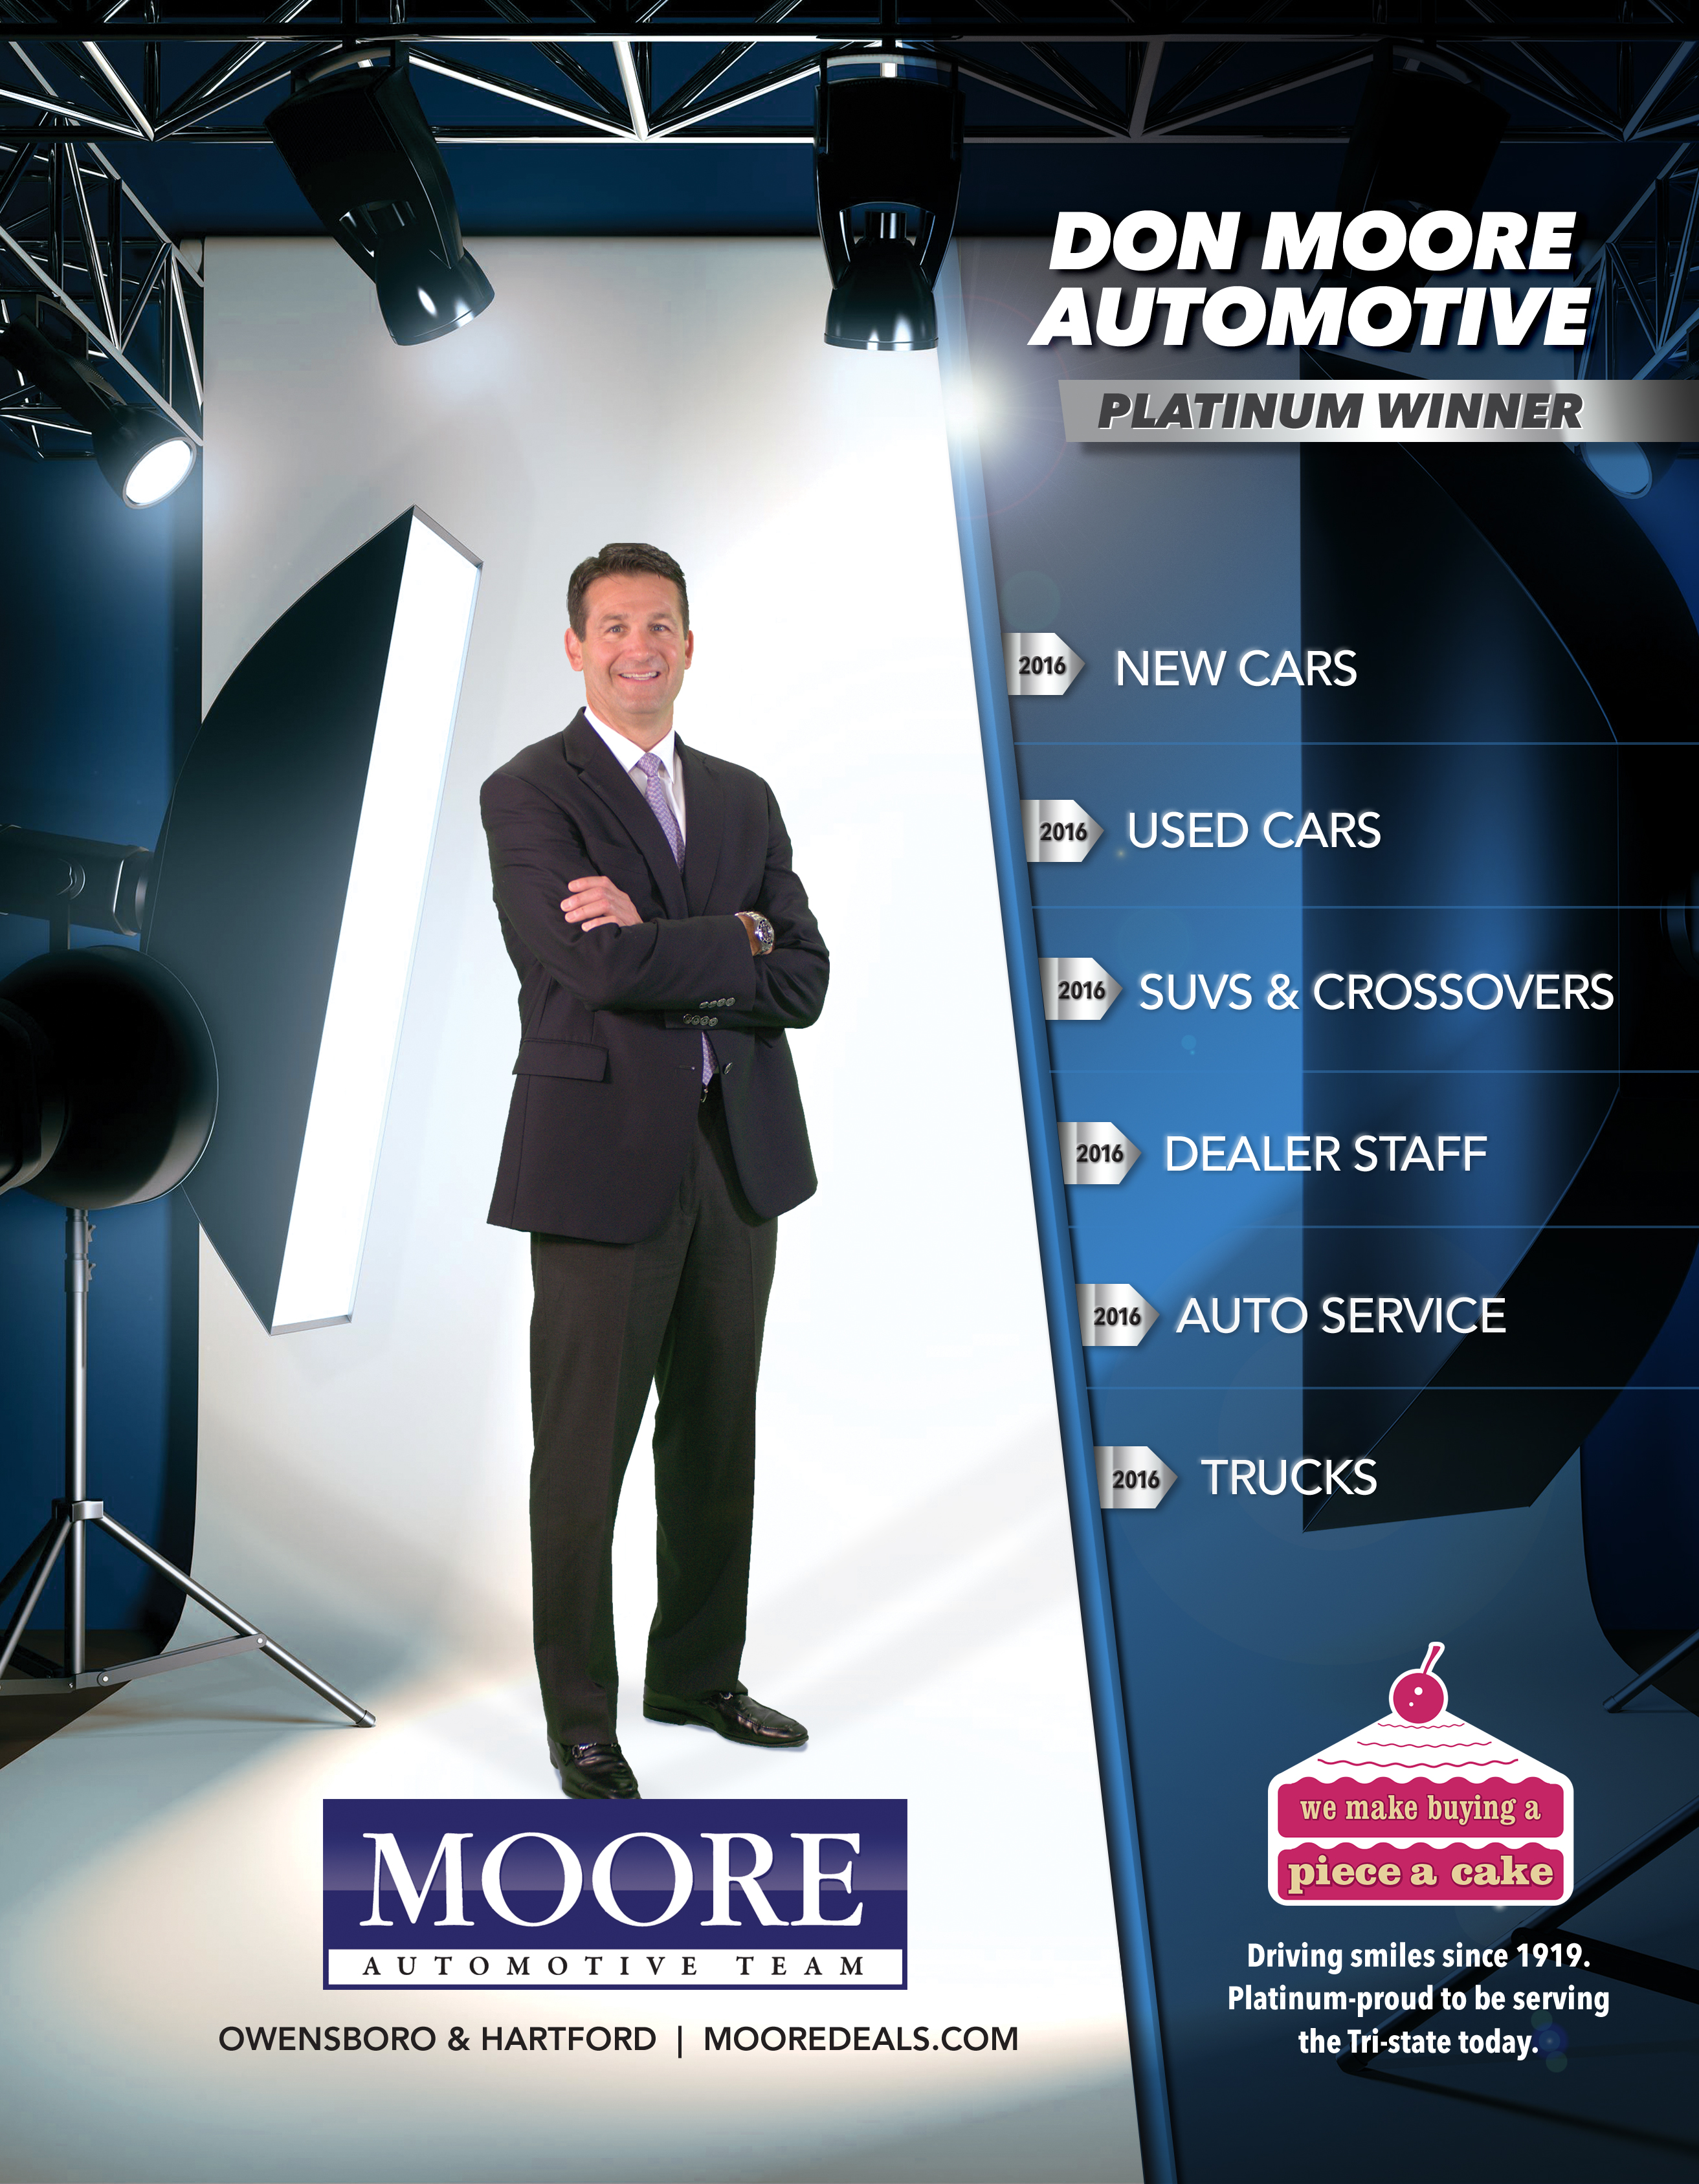 Don Moore Automotive Reader's Choice Award